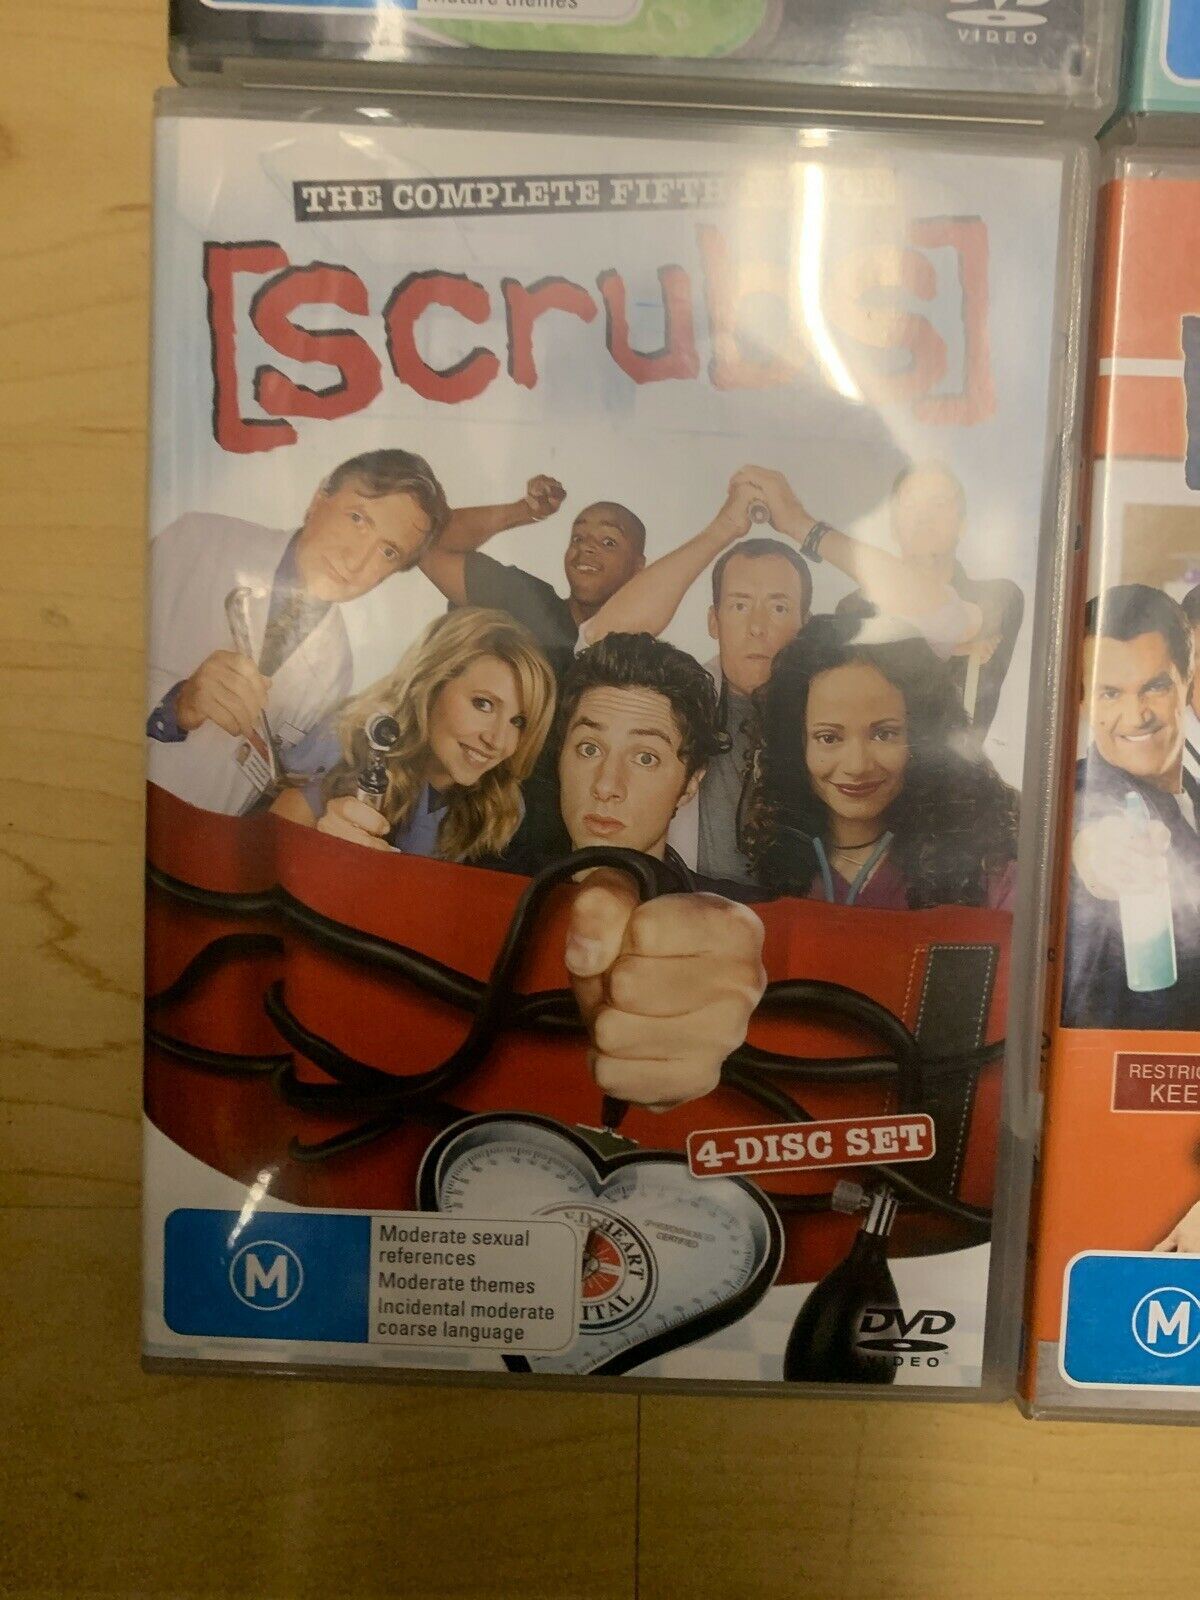 Scrubs - The Complete Season 1-8 (DVD) Region 4